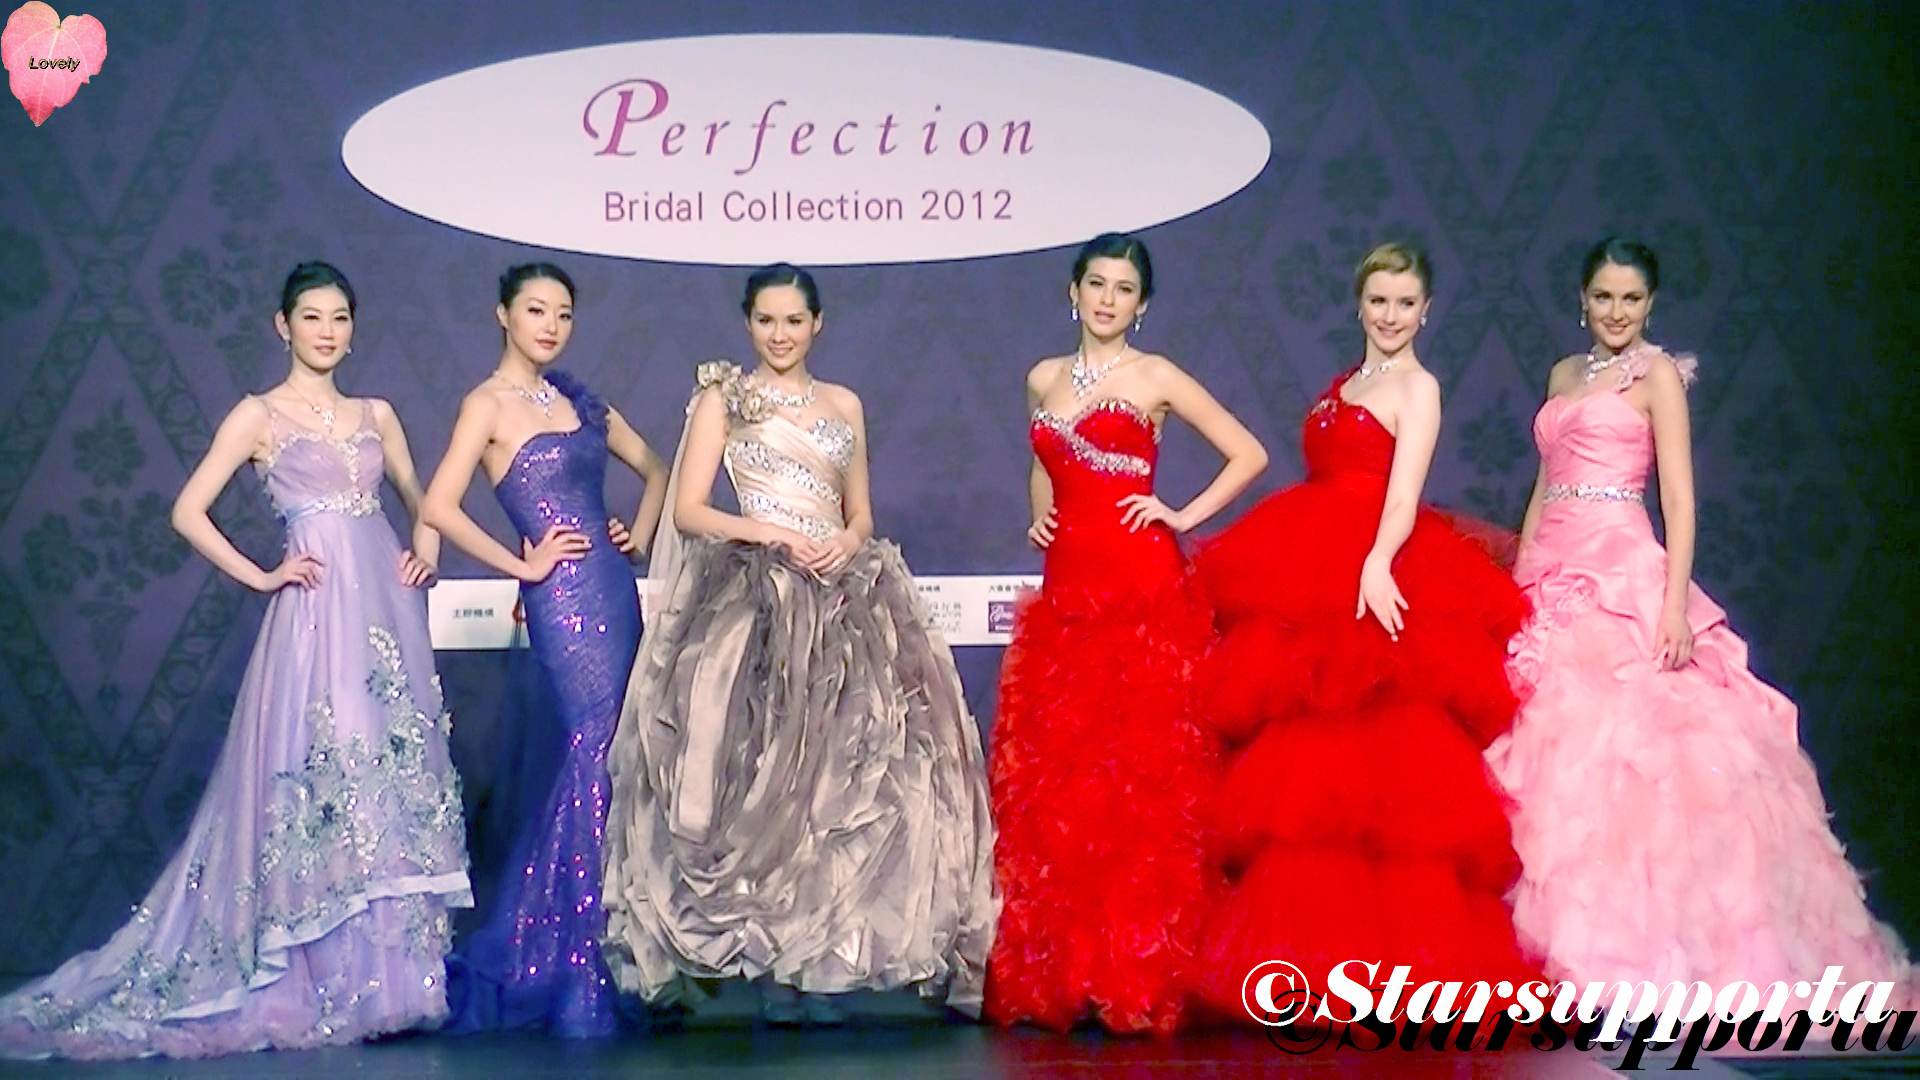 20120310 Hong Kong Wedding & Overseas Wedding Expo - Perfection: Bridal Collection 2012 @ 香港會議展覽中心 HKCEC (video)